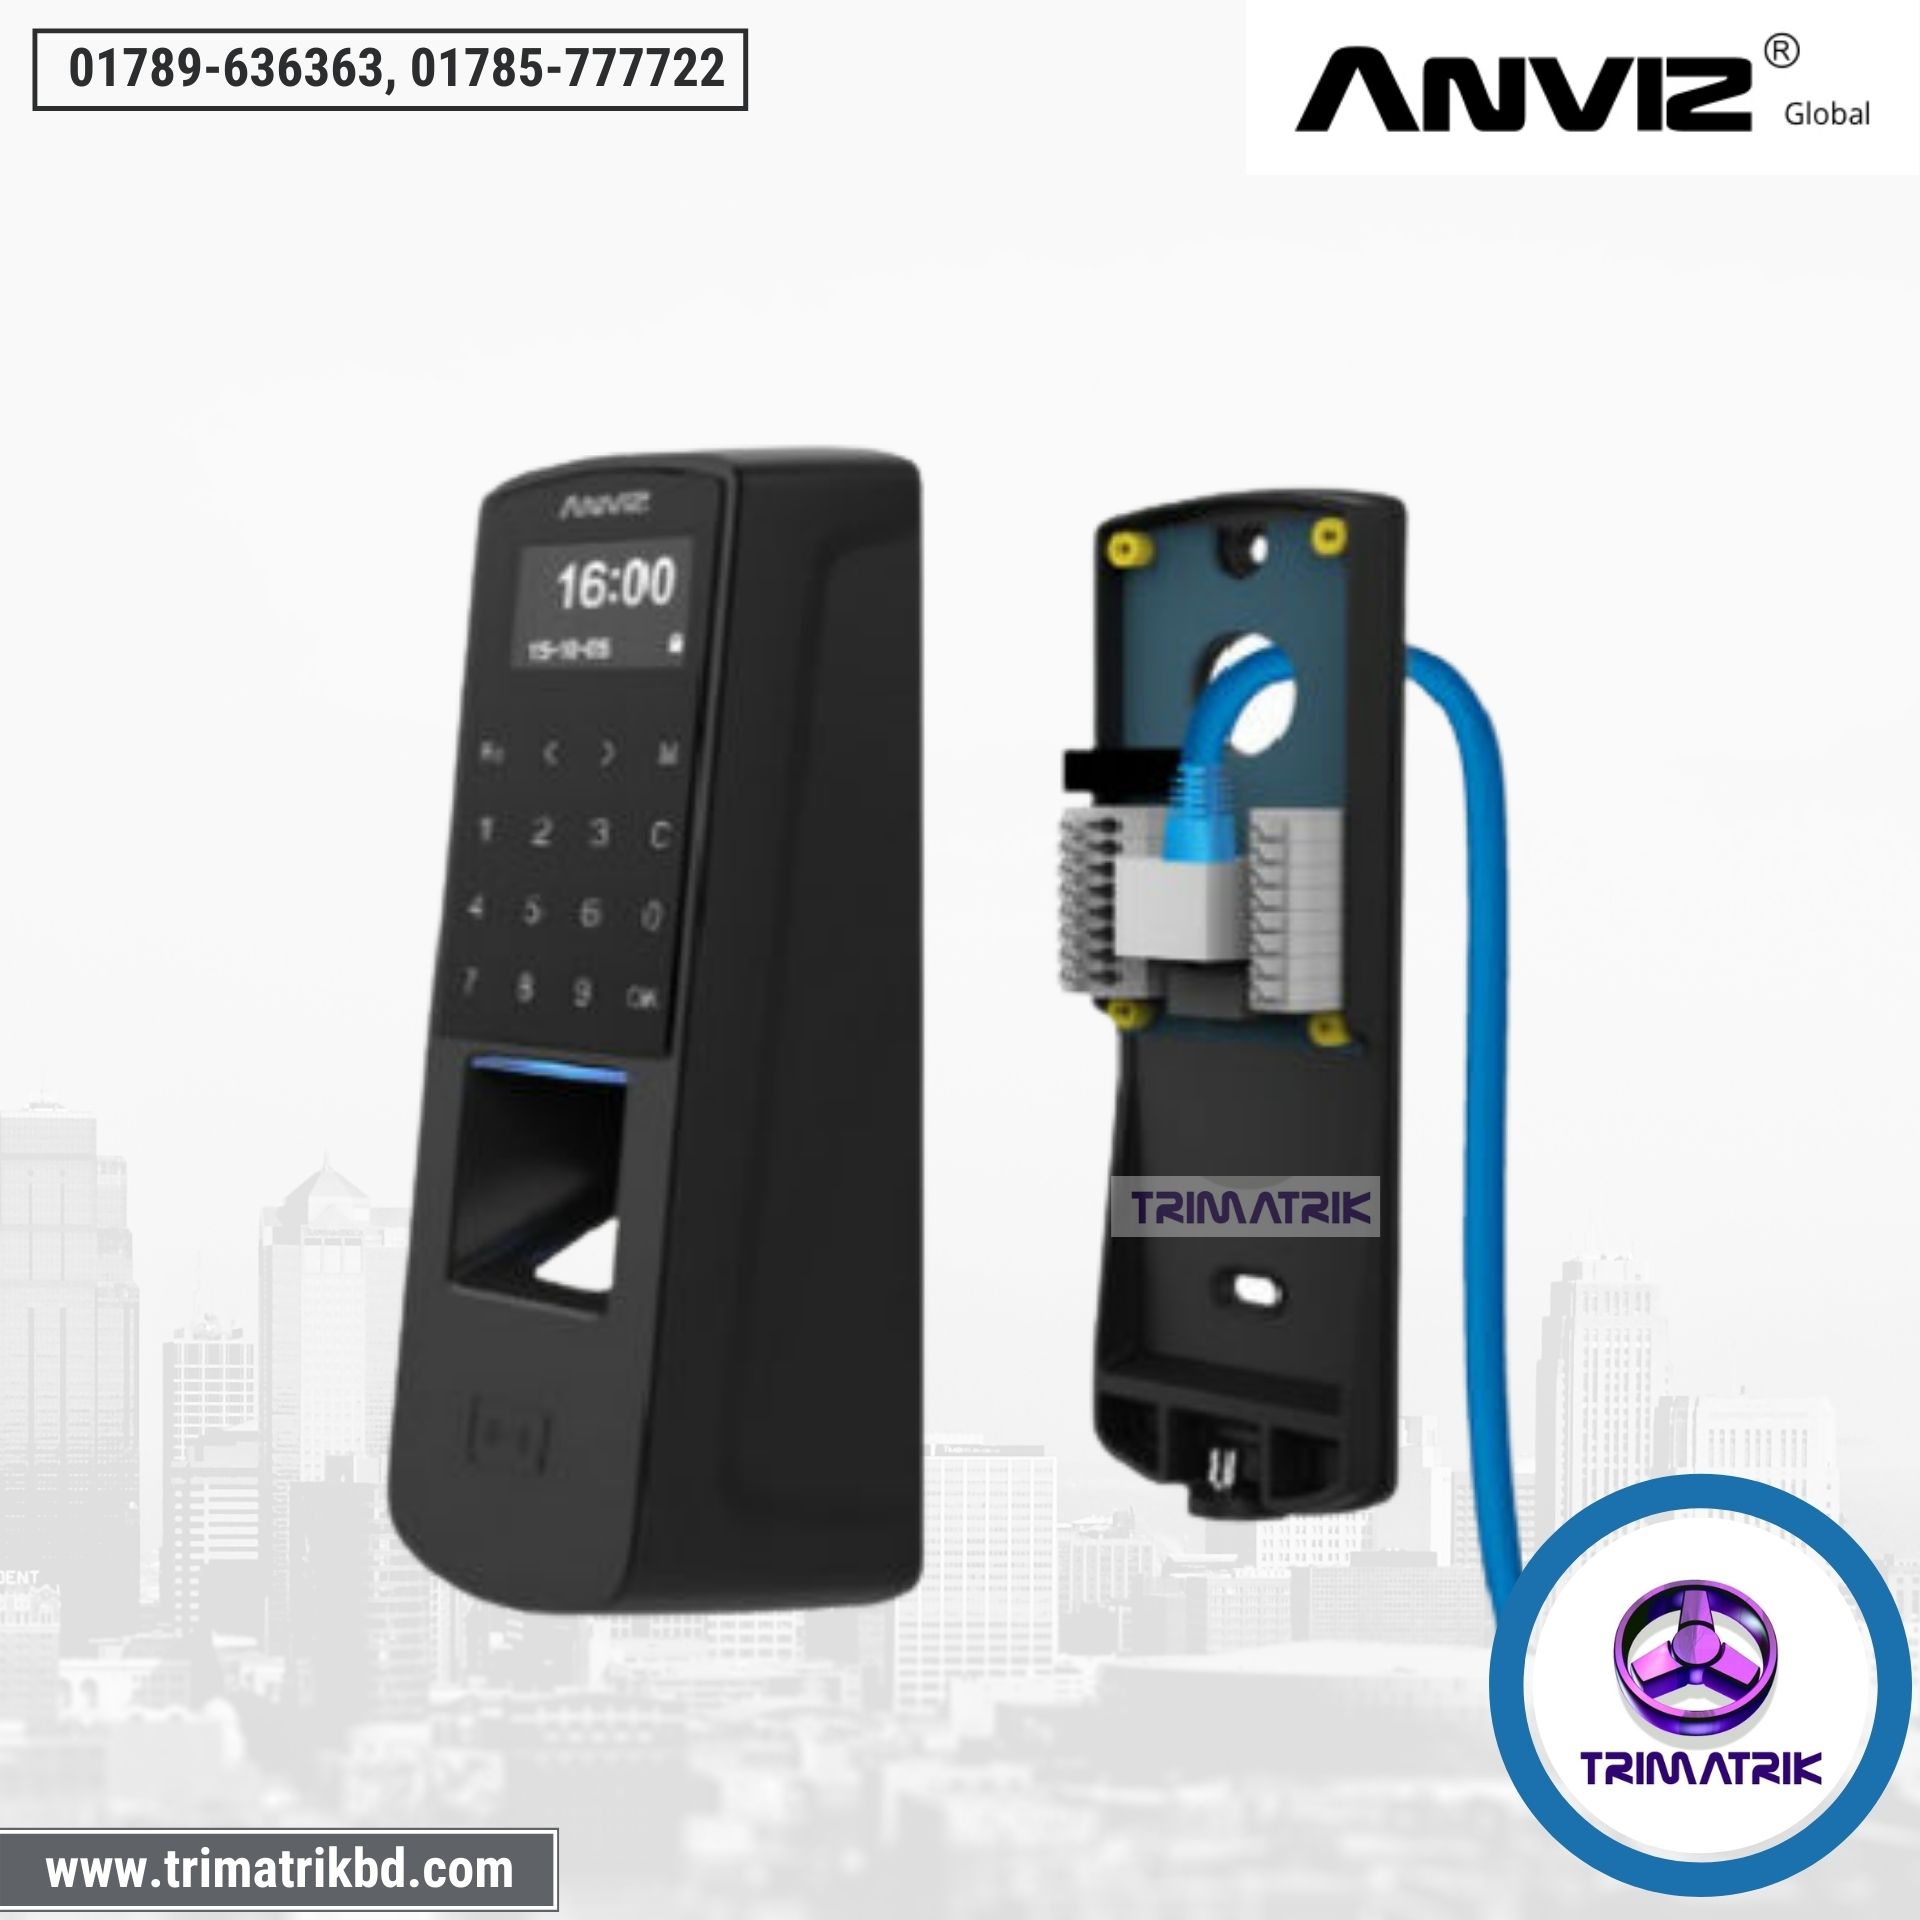 Anviz P7 Price in Bangladesh